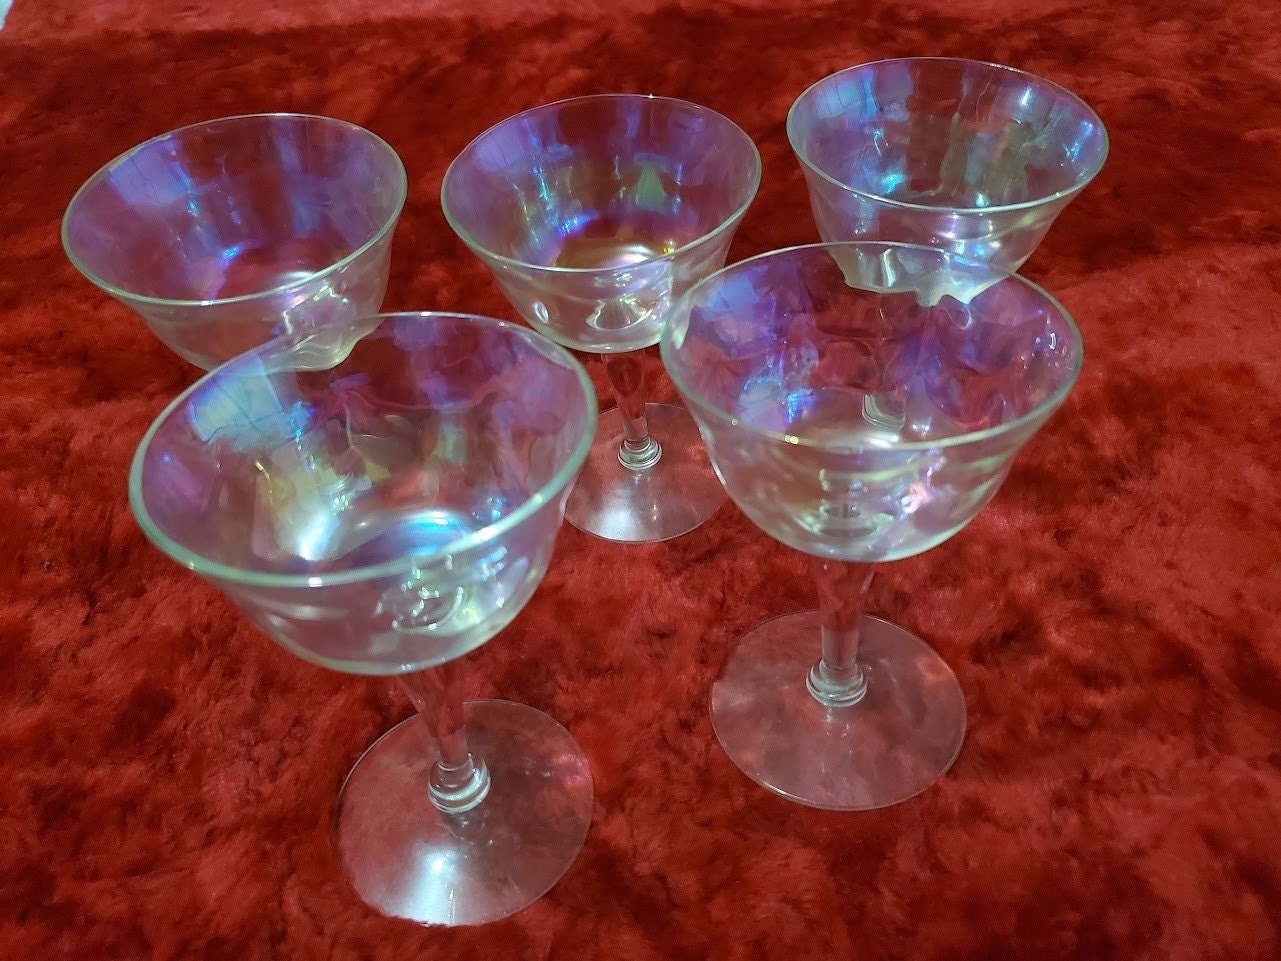 Iridescent Martini Glasses Coupe Cocktail Glasses 8 oz | Set of 4 |  Champagne Classic Manhattan Glas…See more Iridescent Martini Glasses Coupe